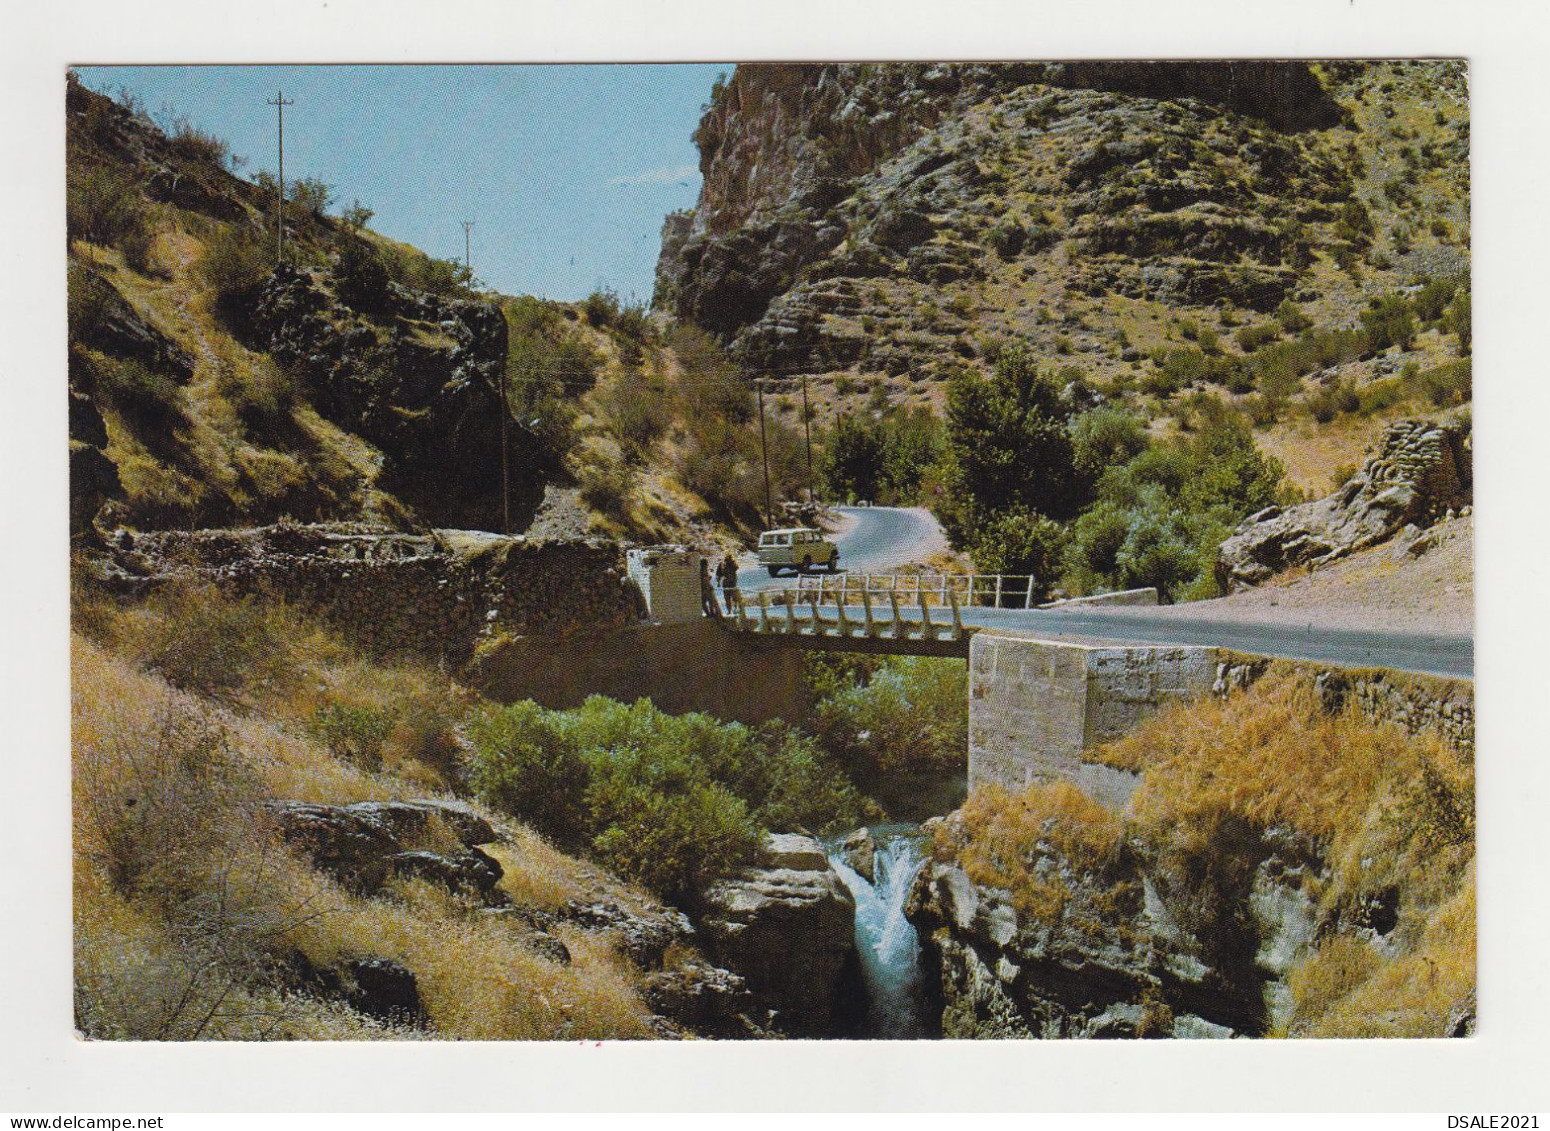 IRAQ IRAK Gully Ali Beg Gorge View Old Car, Postcard By IRAQI AIRWAYS Vintage Photo Postcard RPPc (22224) - Iraq